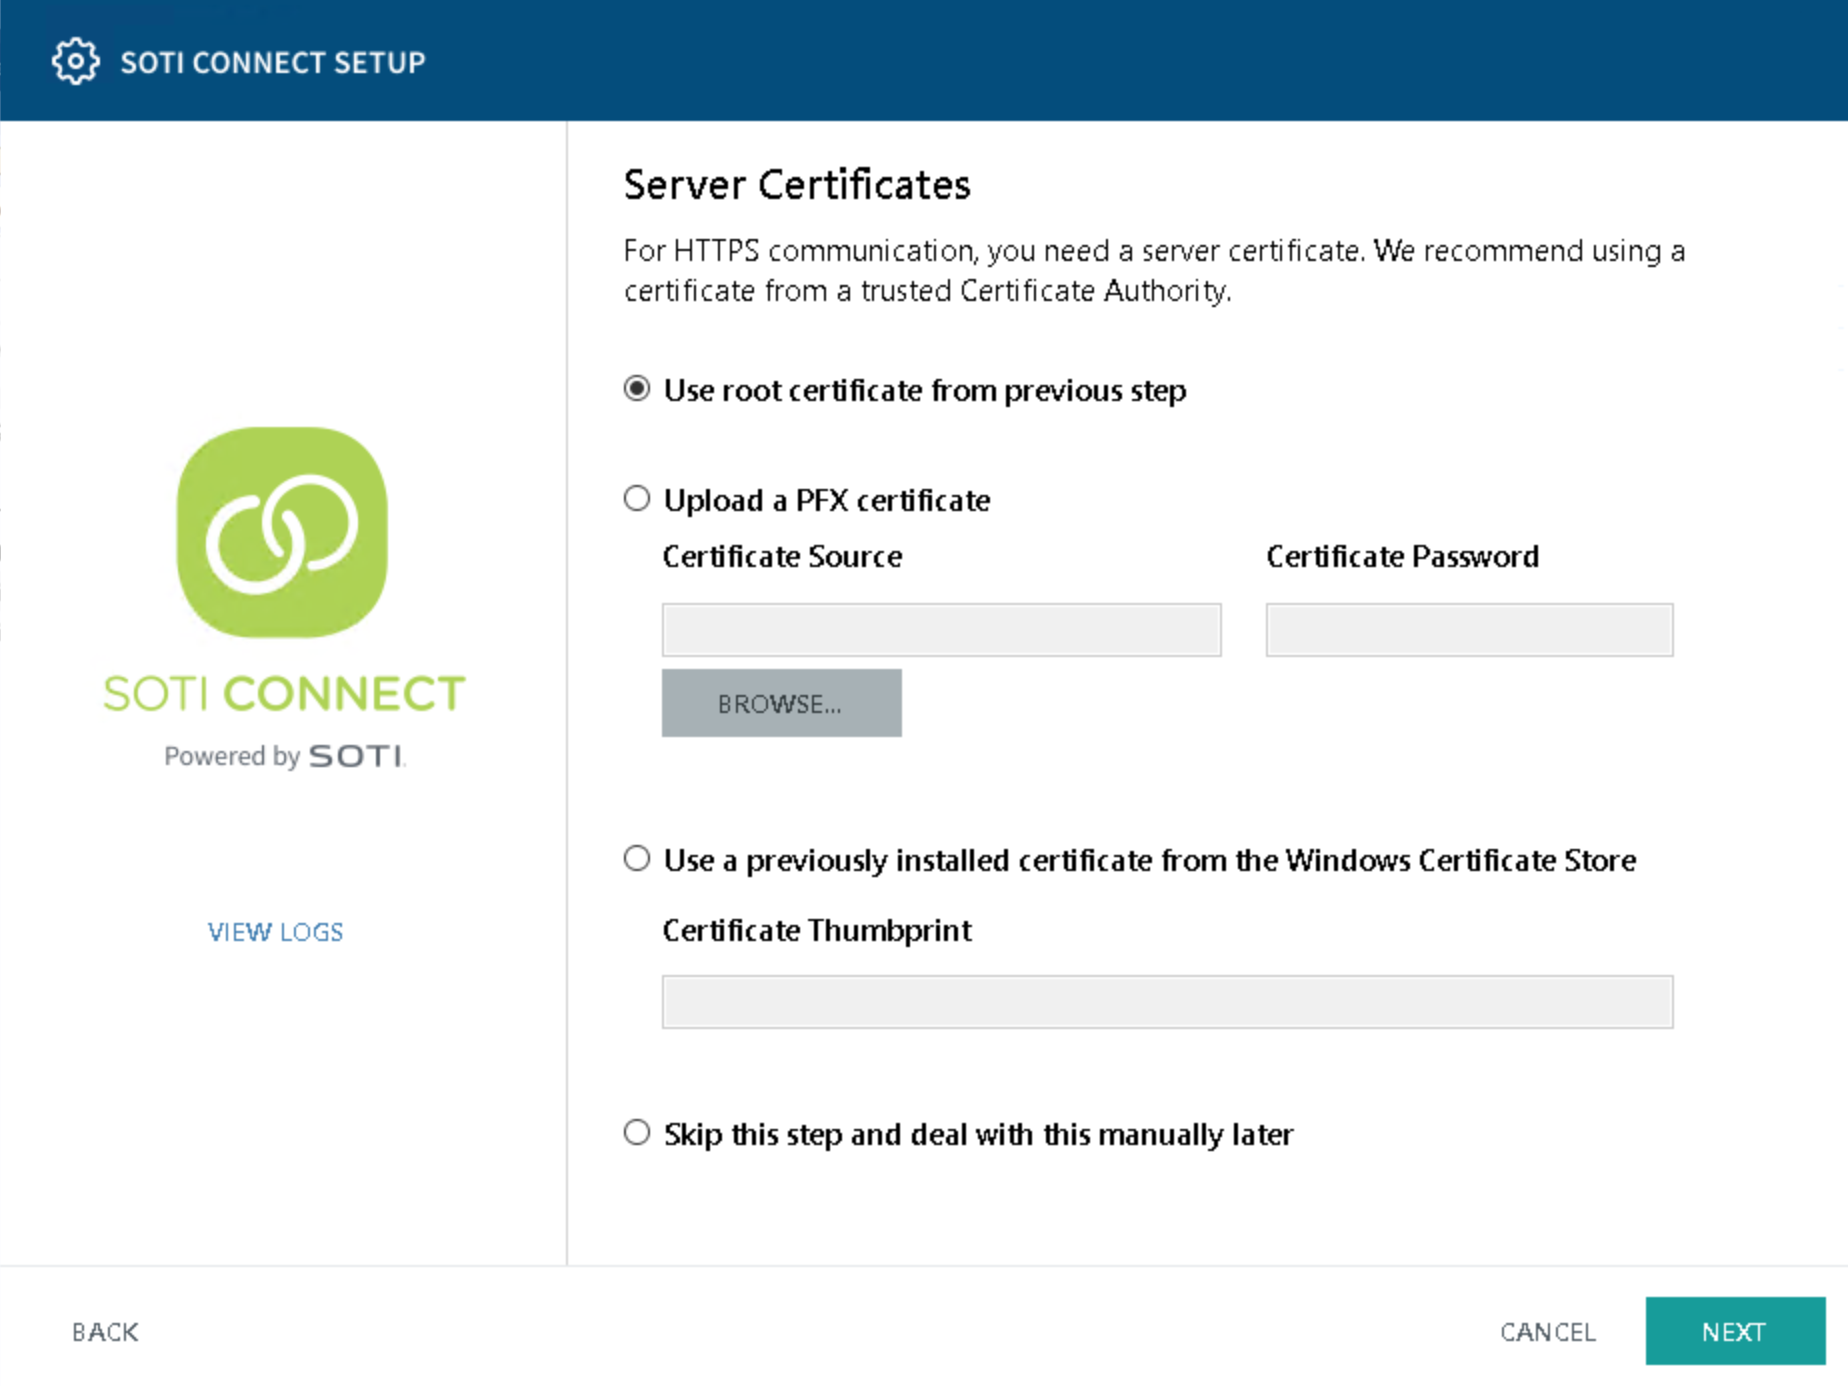 Select a server certificate